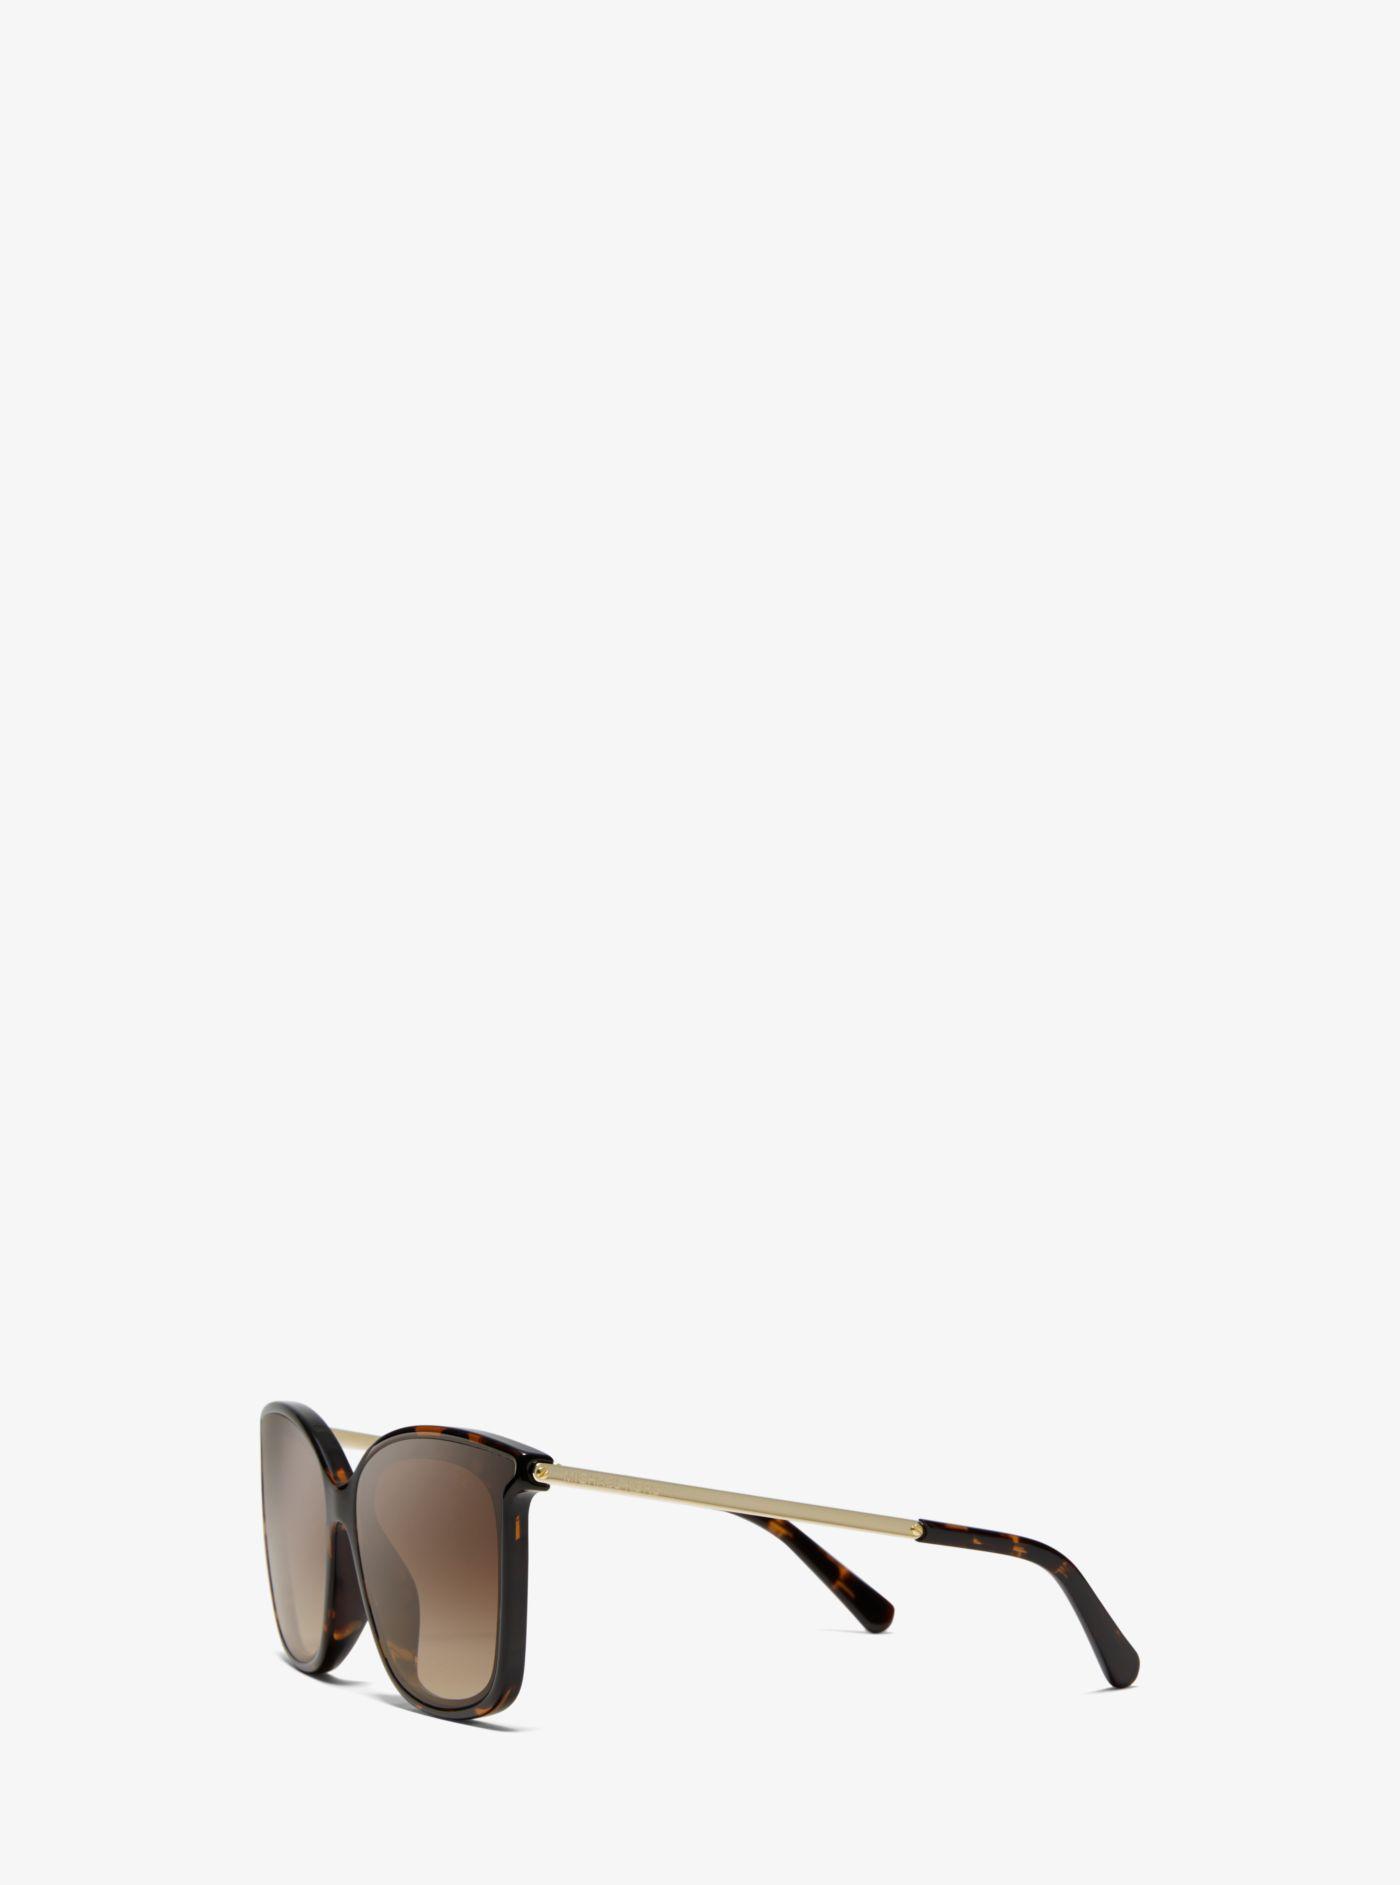 Michael Kors Zermatt Sunglasses - Lyst